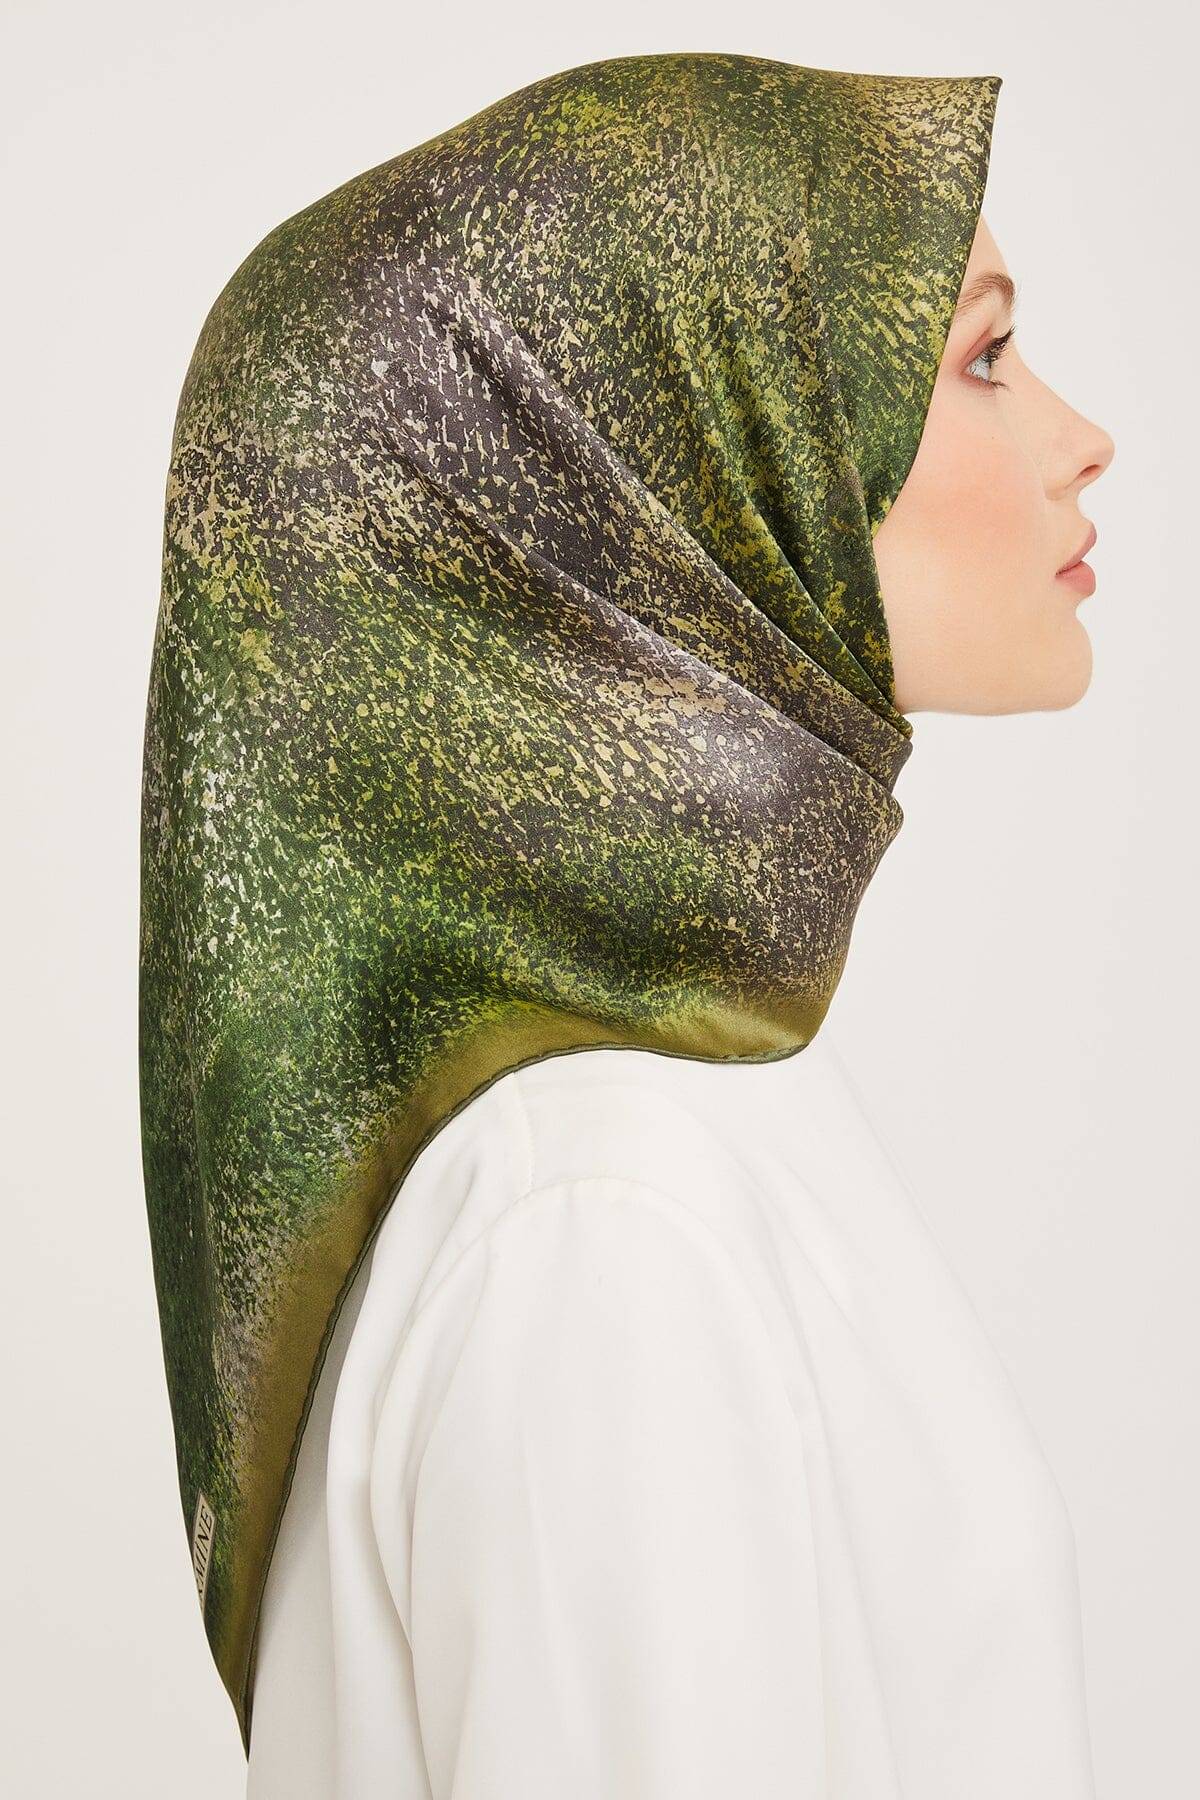 Armine Claude Everyday Silk Scarf #56 Silk Hijabs,Armine Armine 